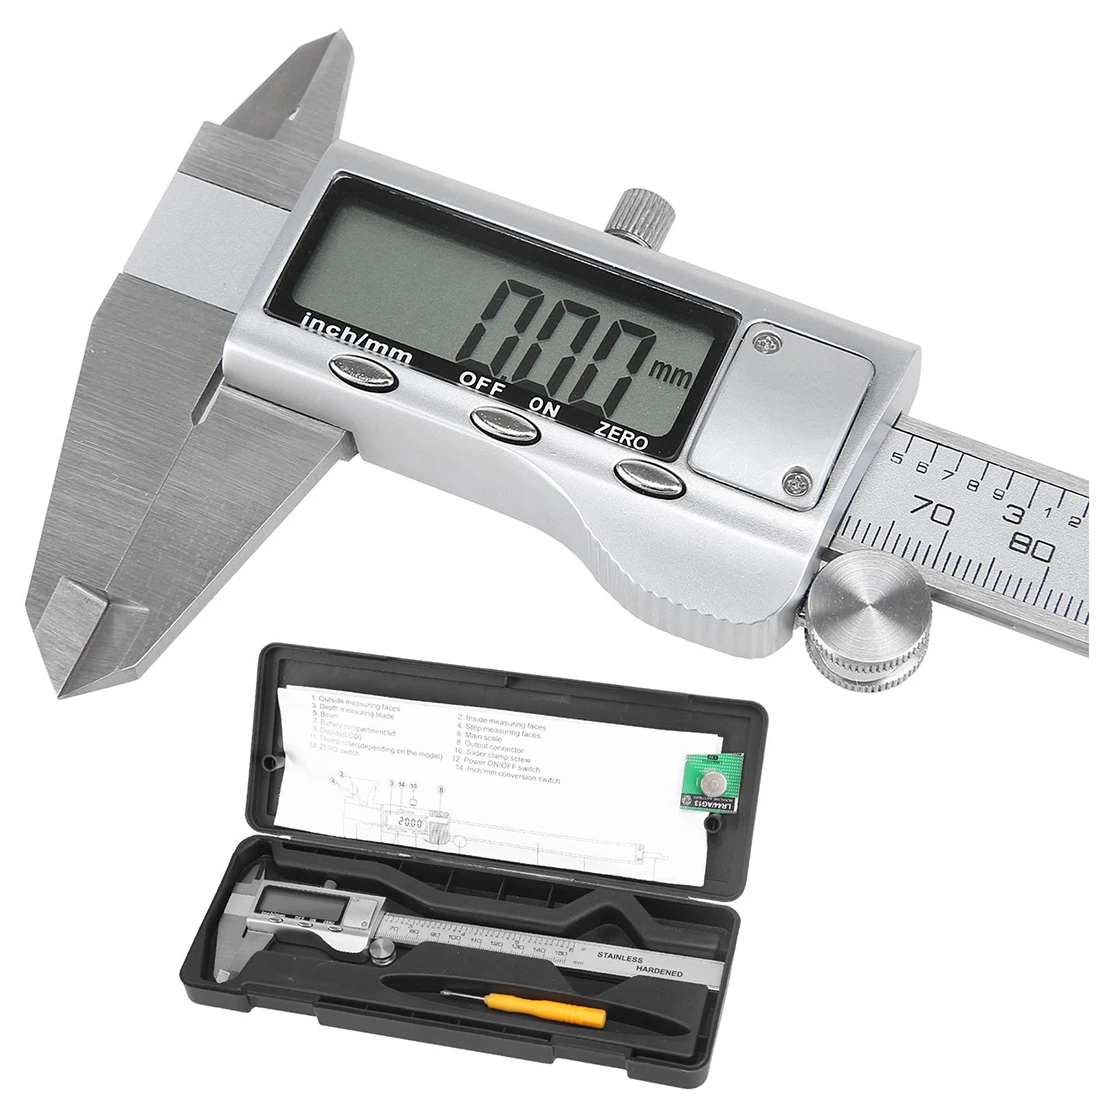 HHTL-150mm " ЖК цифровой штангенциркуль электронный манометр микрометр прецизионный инструмент серебро